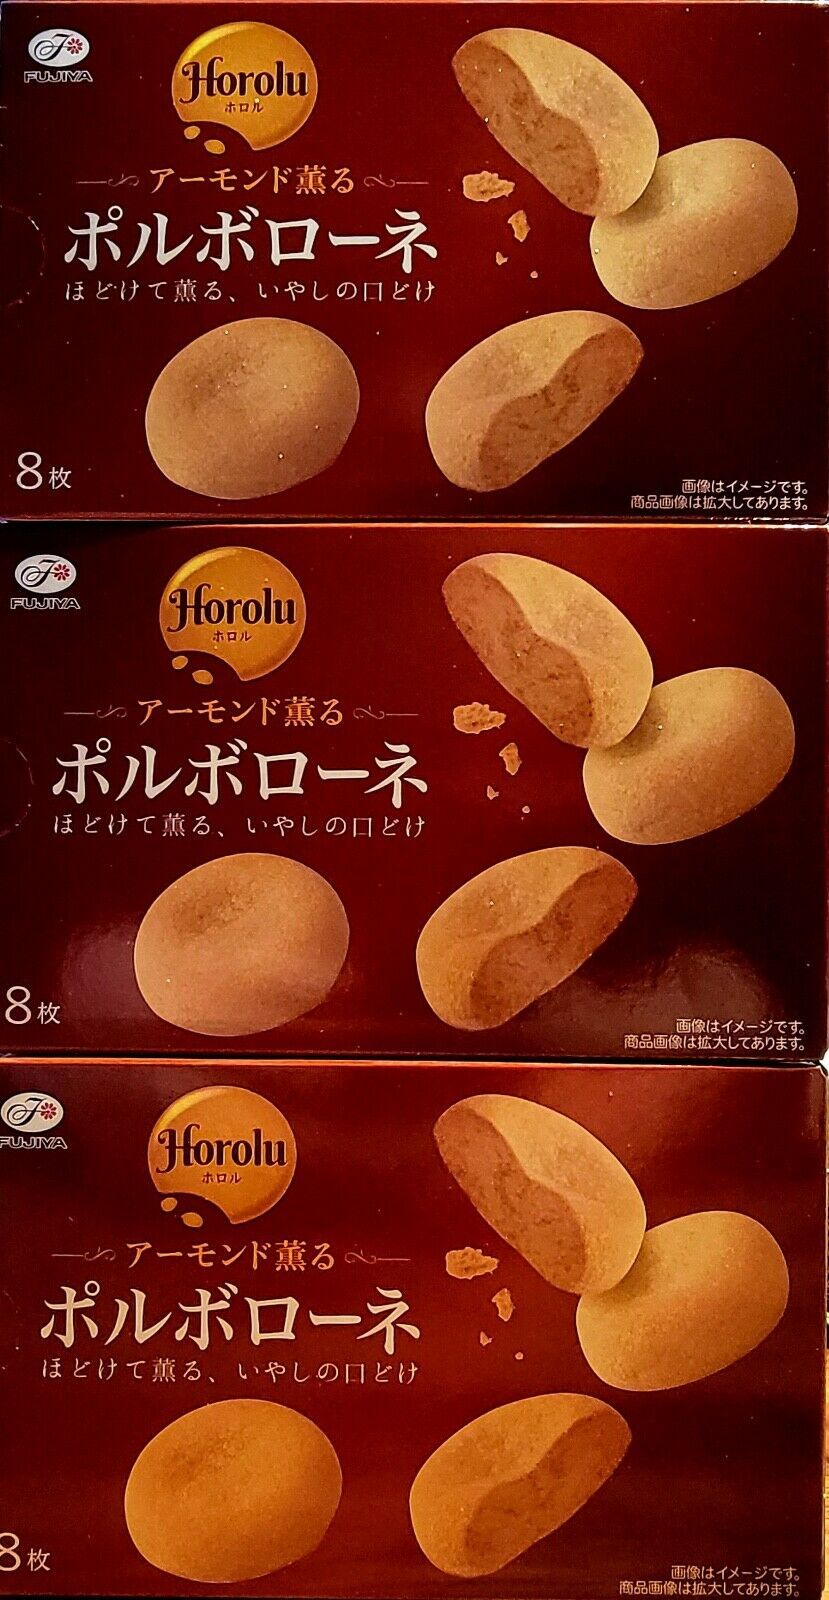 FUJIYA Japan Horolu Shortbread Almond Cookies Three (3) Boxes 3.38oz each x 3 - $19.75